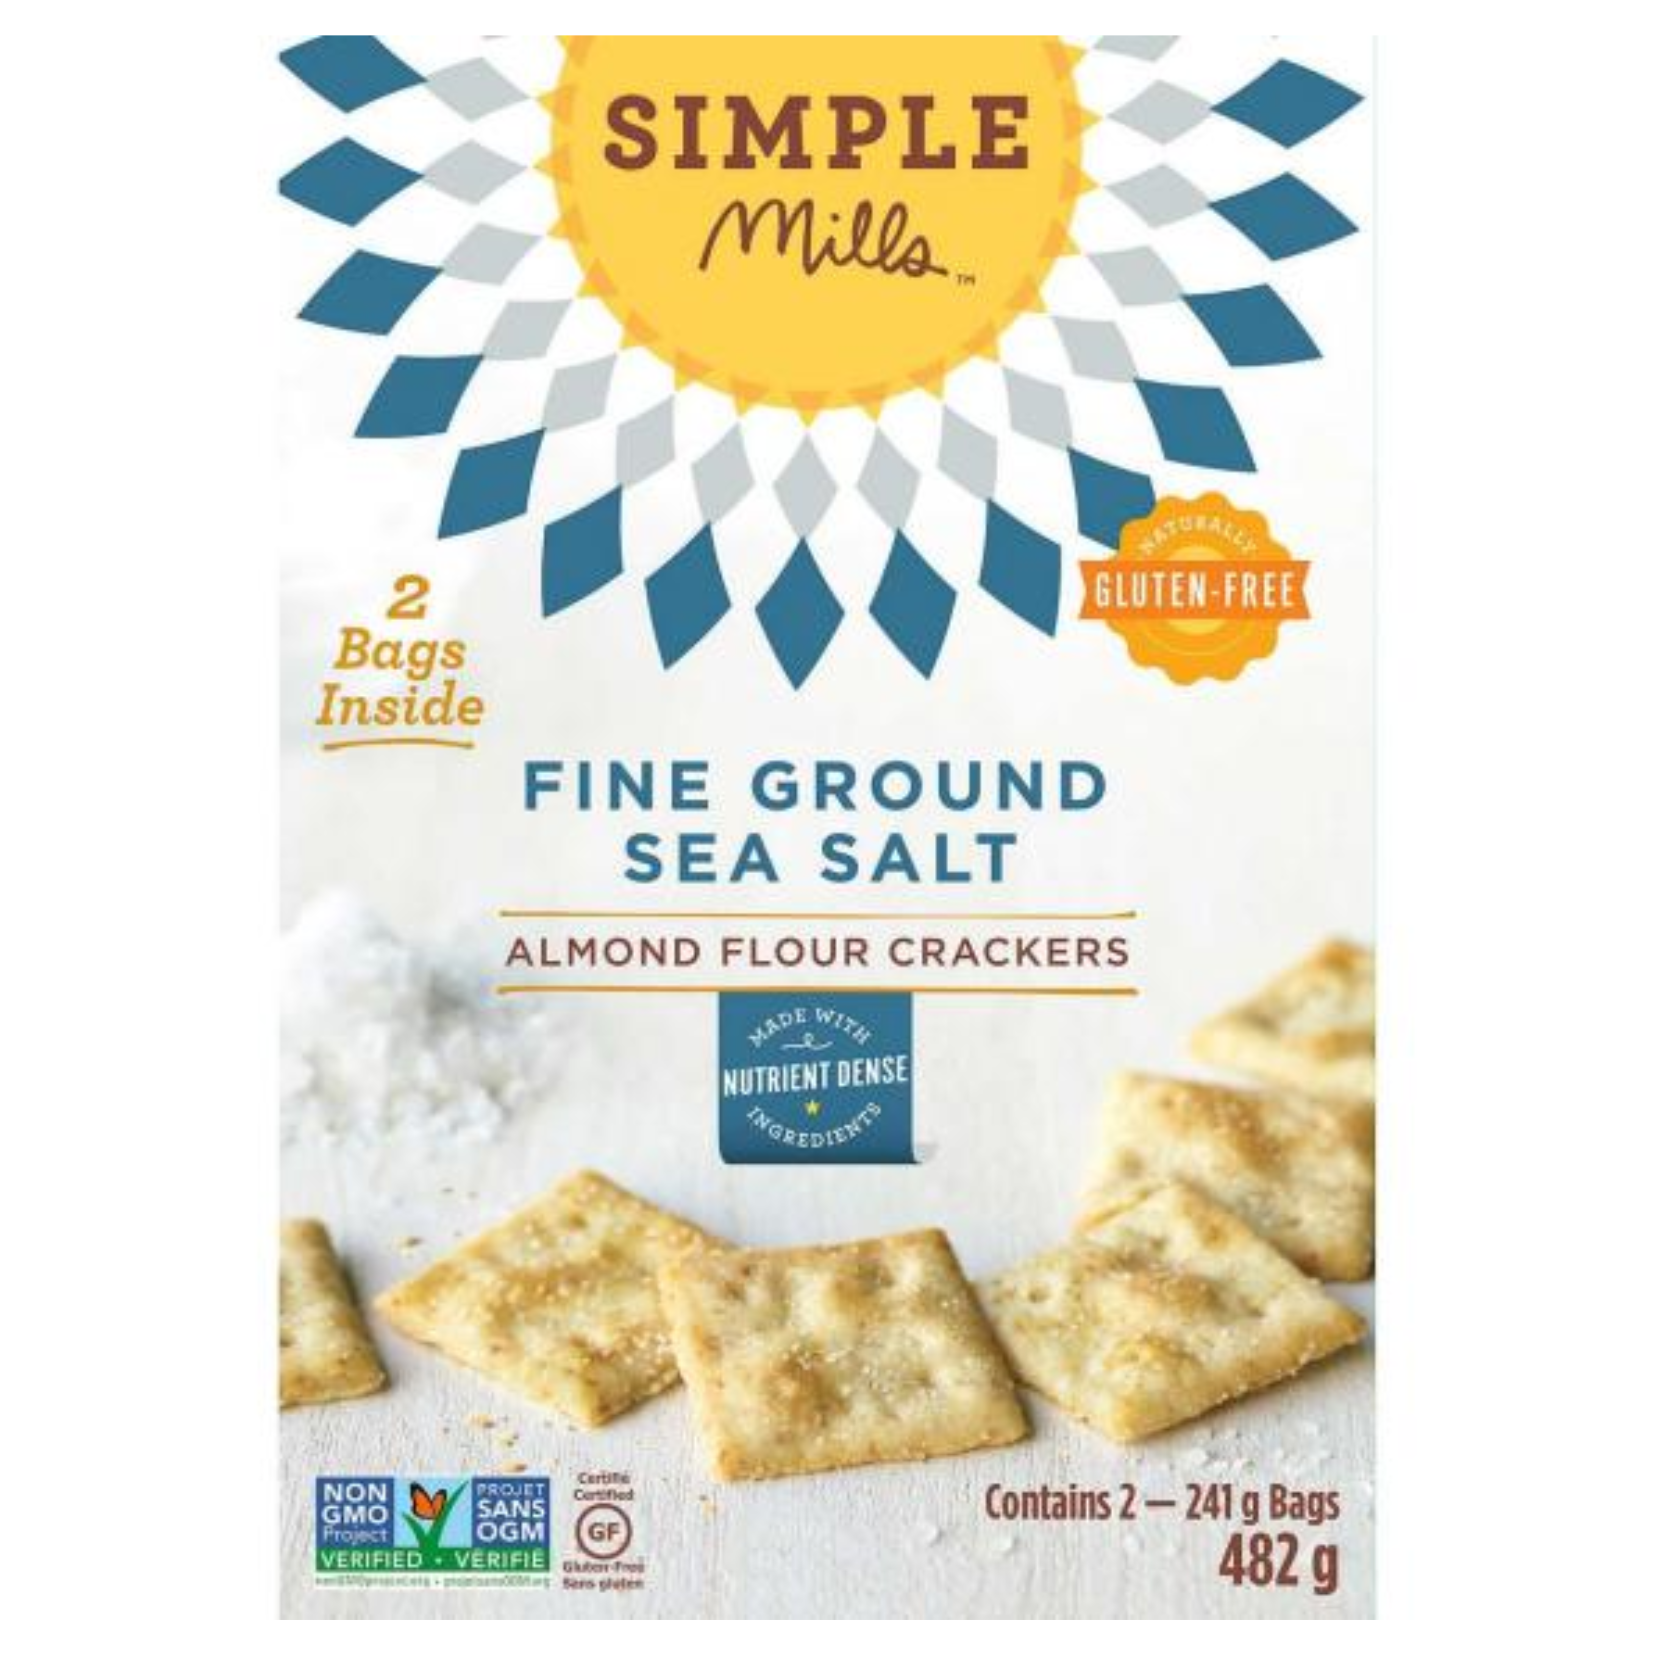 Simple Mills Gluten Free Almond Flour Crackers 241g x 2